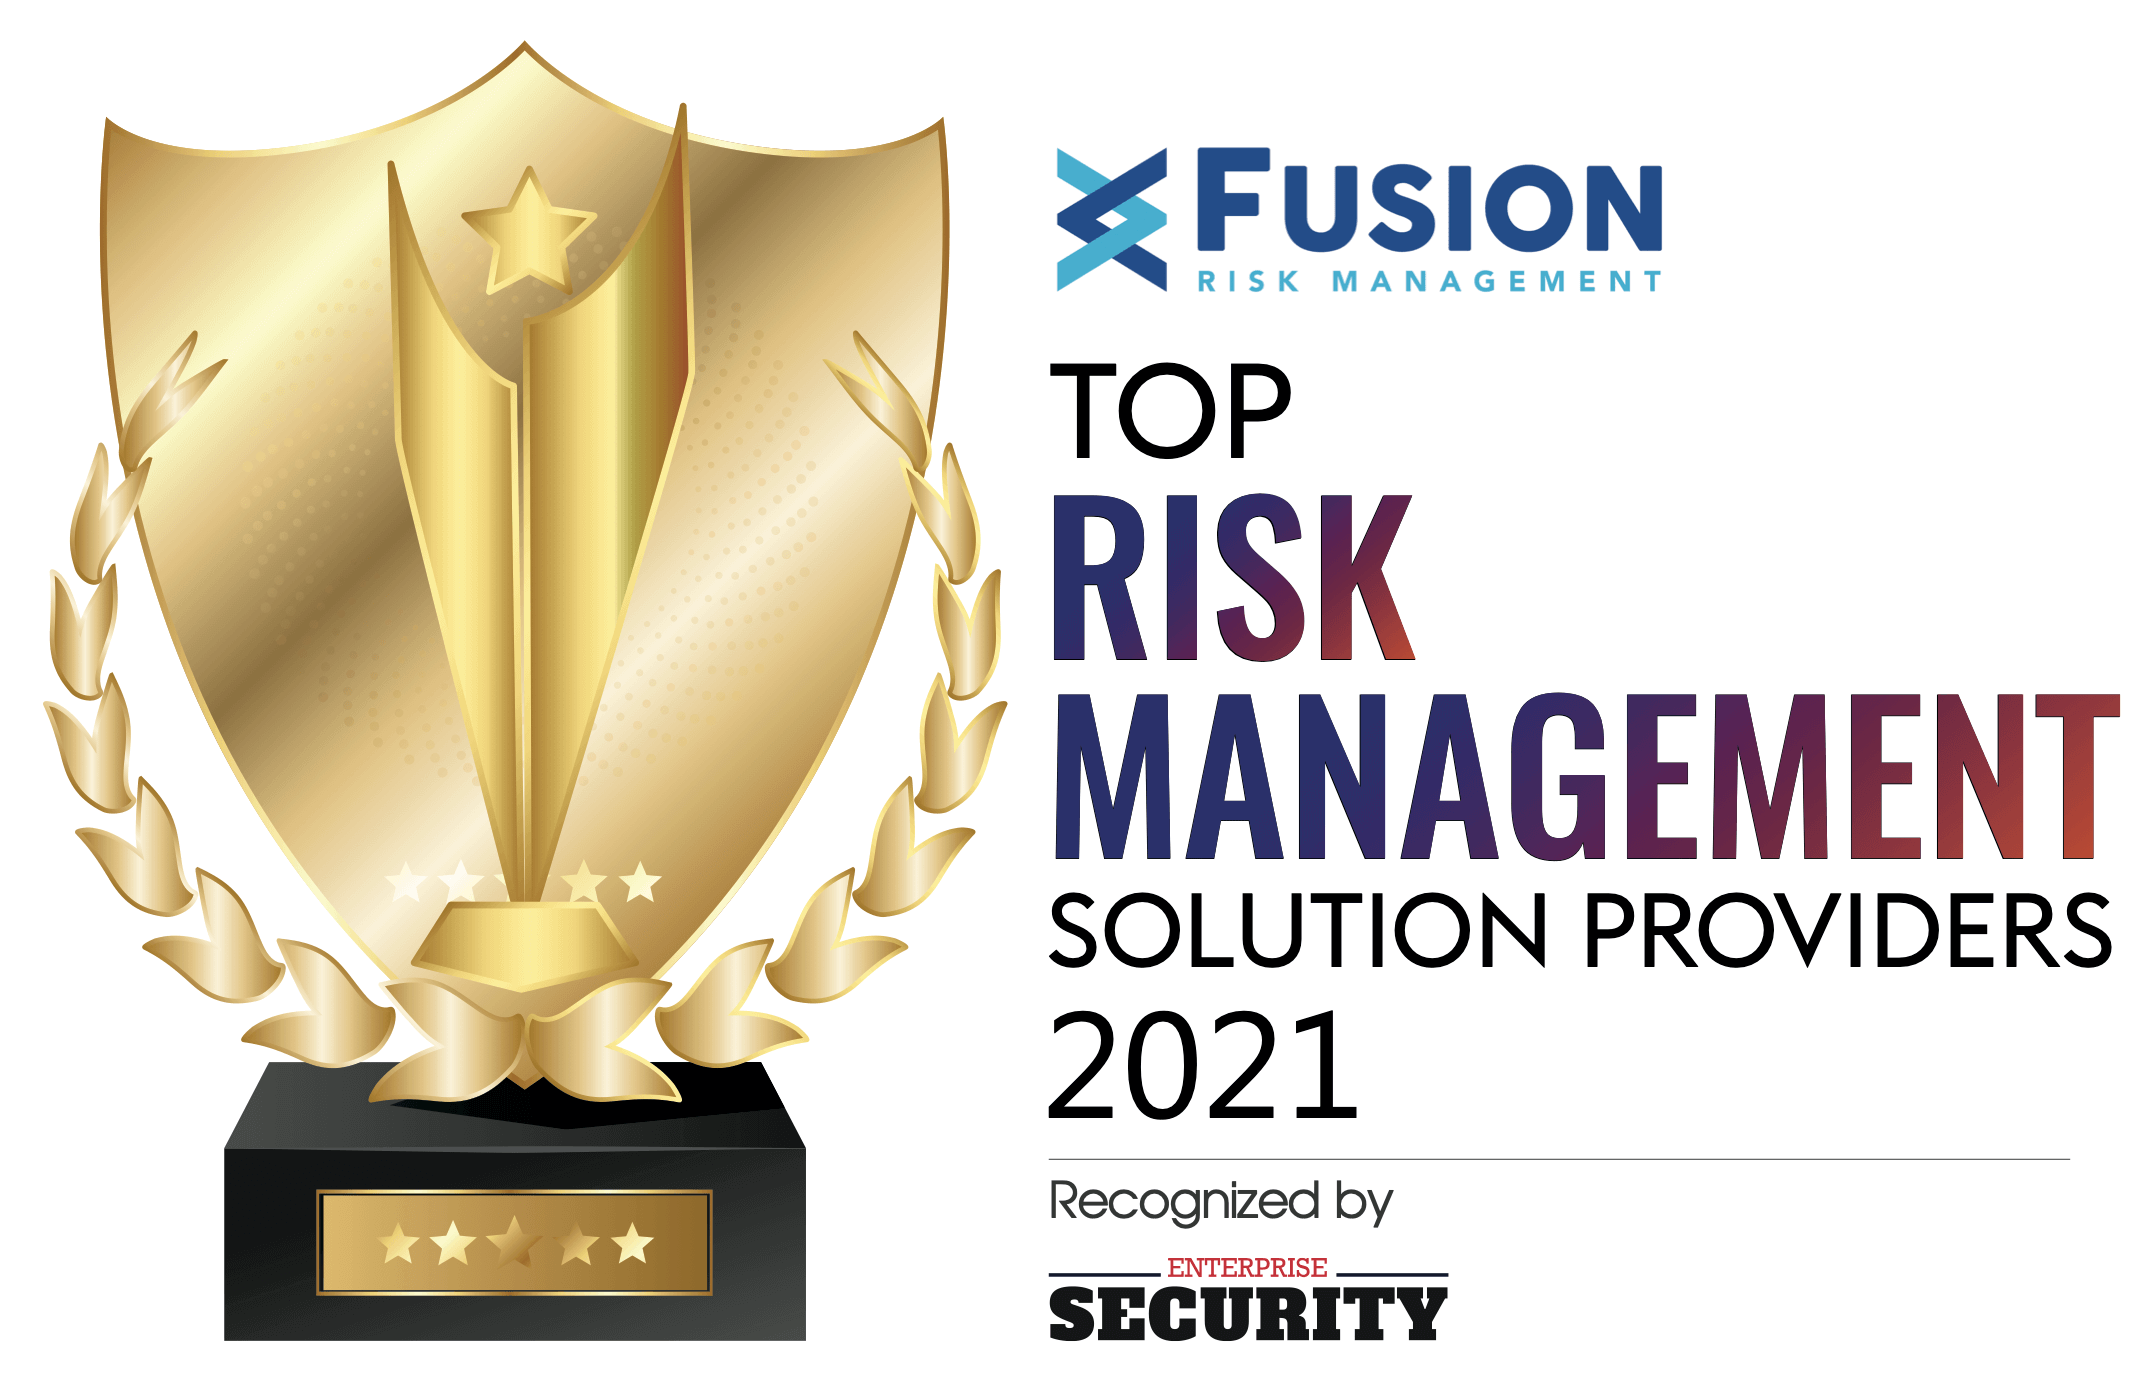 Top Risk Management Solution Provider 2021 by Enterprise Security Magazine